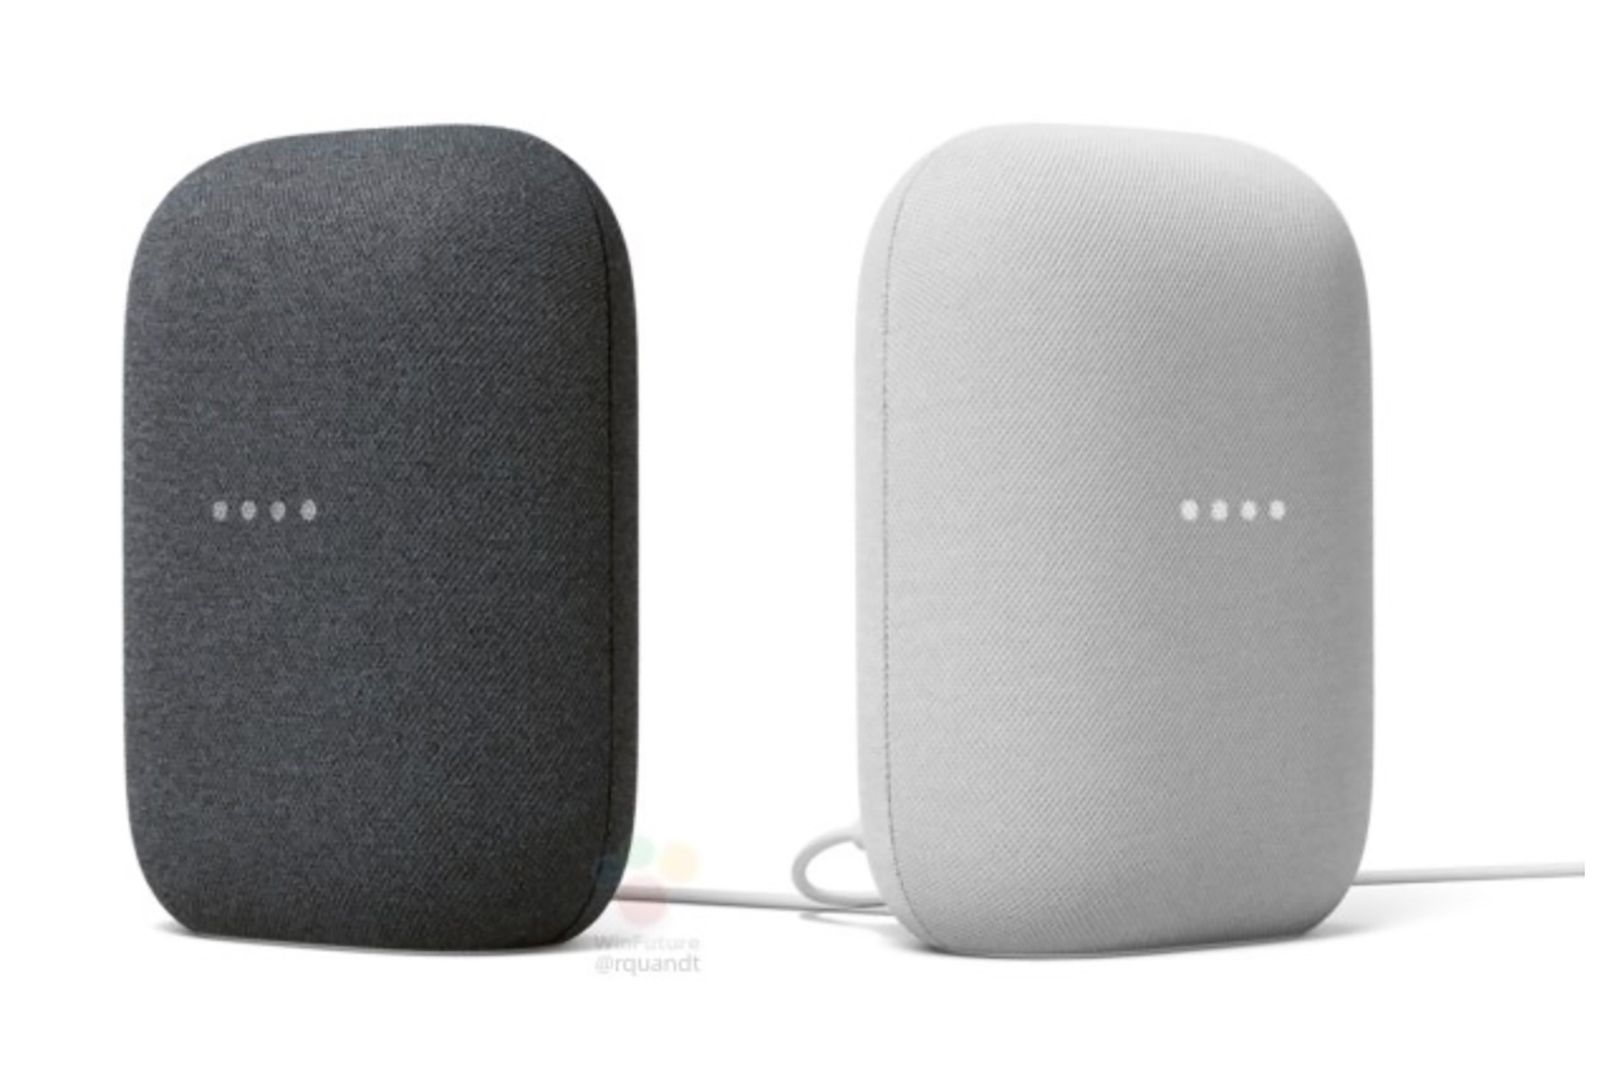 Google's next smart speaker, the 100 Nest Audio, pictured in new leak photo 3